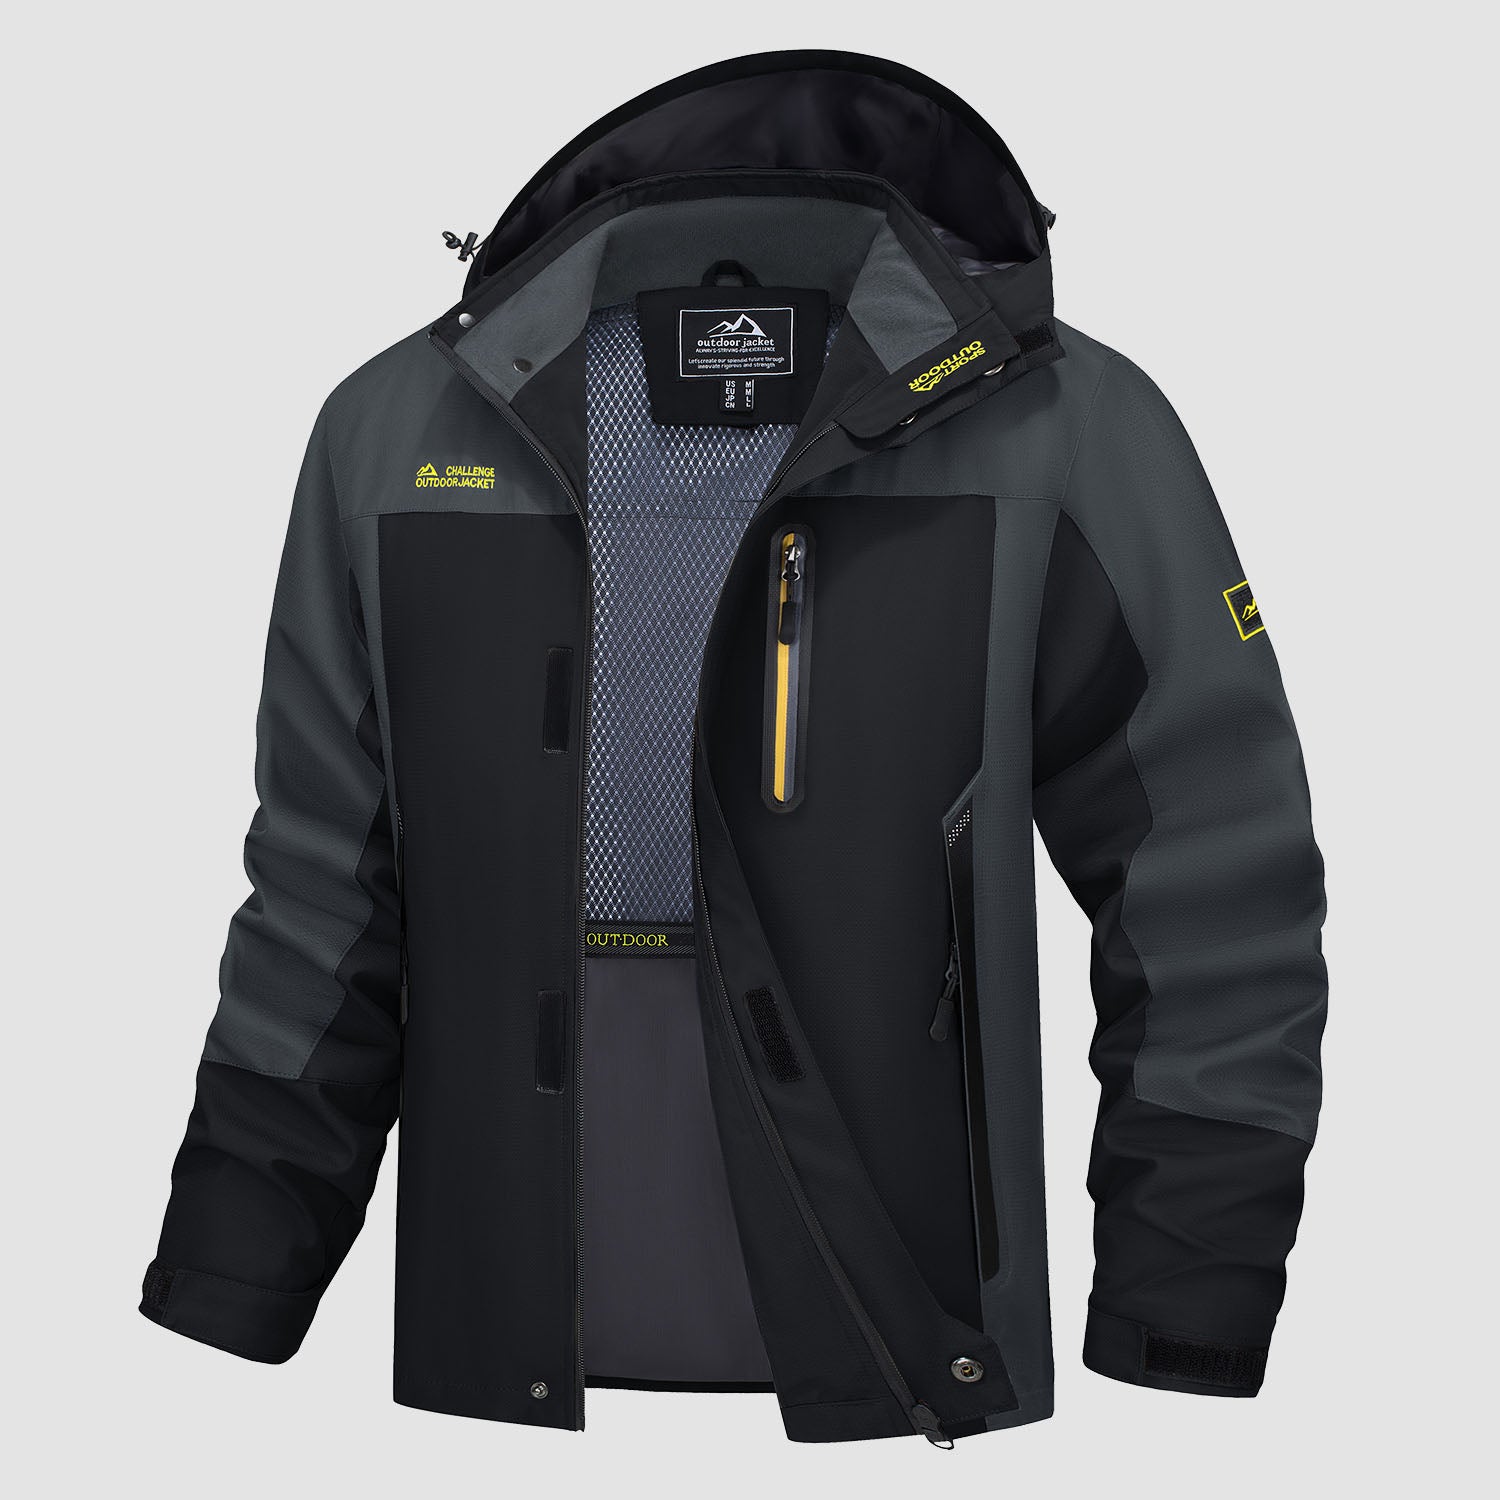 Men's Windproof Warm Jackets: Lightweight, Waterproof Sports Coat For  Outdoor Activities (Fishing, Hiking, Camping)